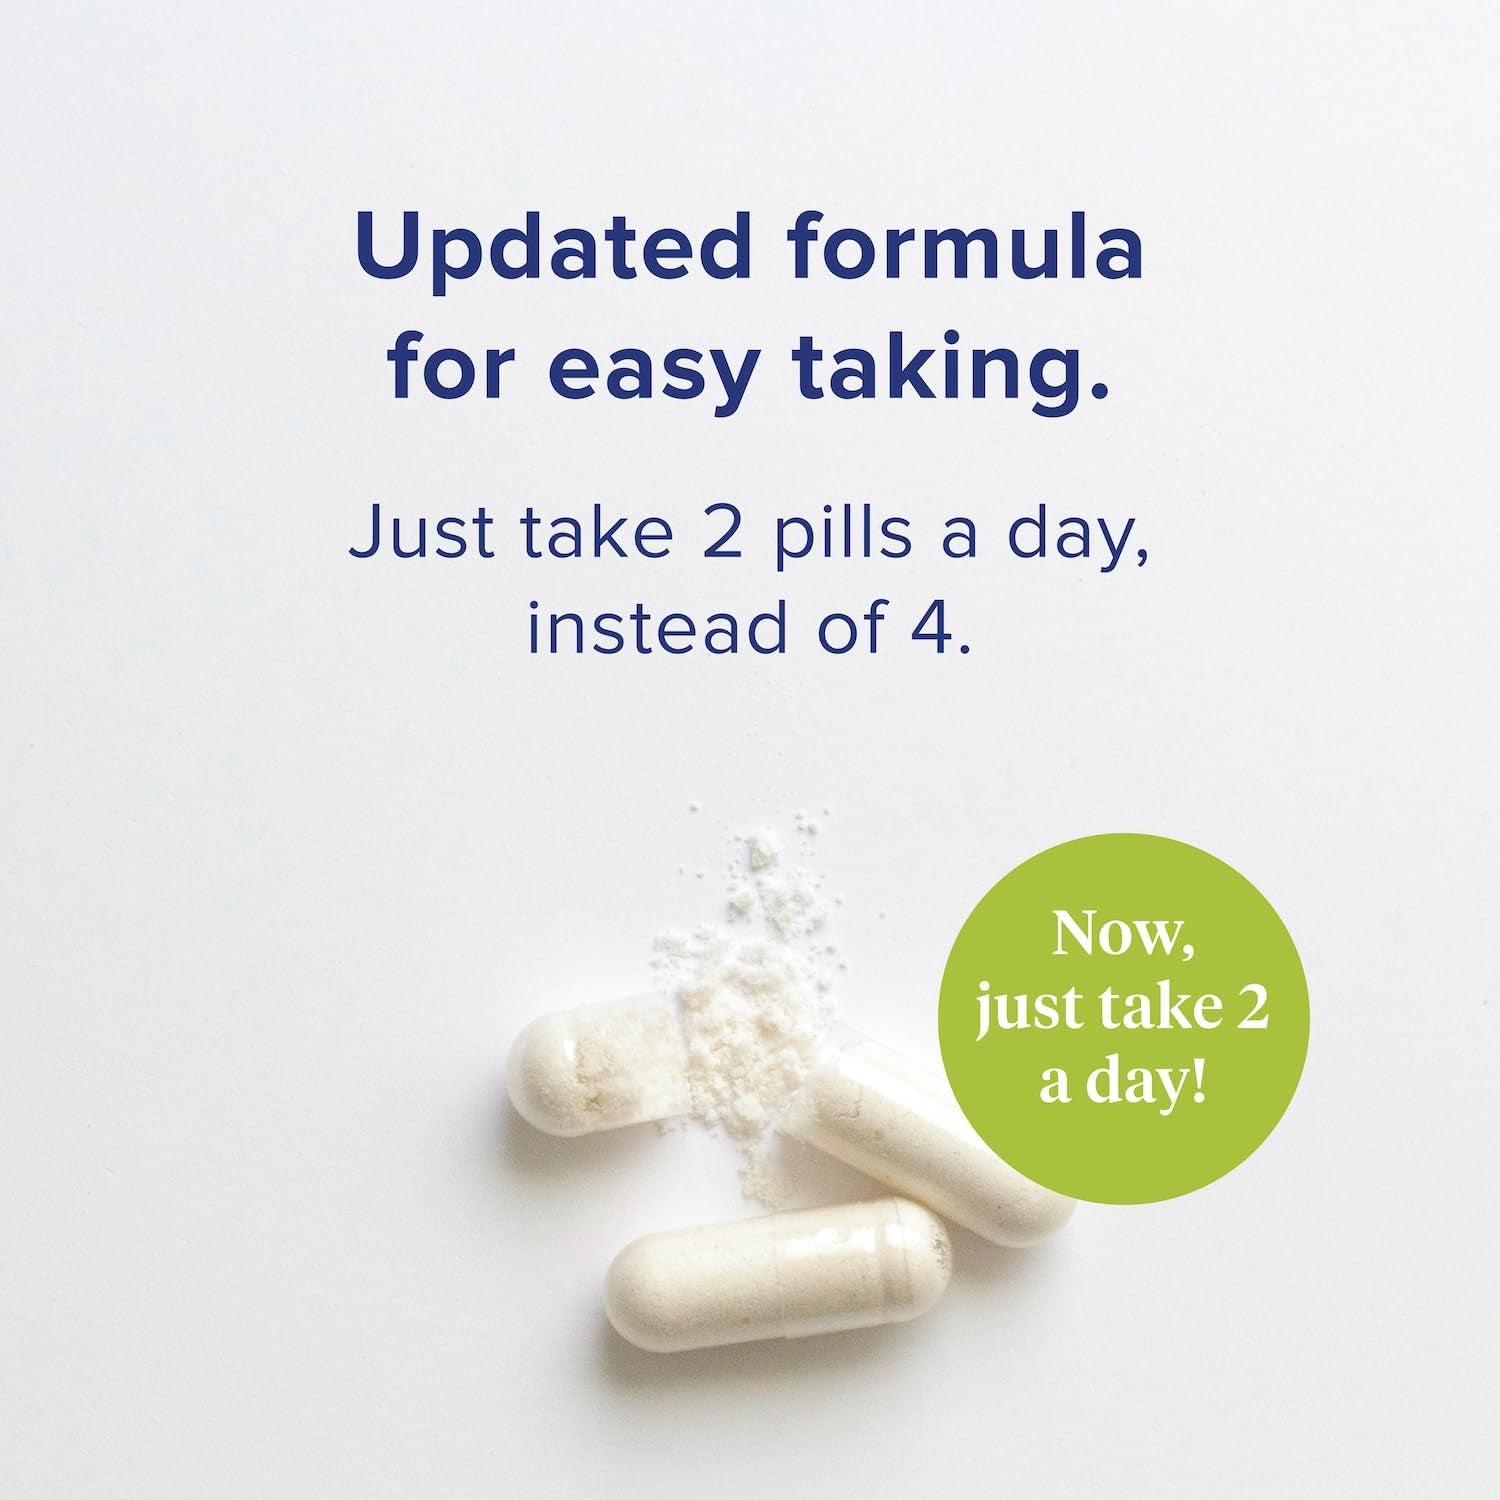 ® Bio Complete 3 - Prebiotic, Probiotic, Postbiotic to Support Optimal Gut Health, 30 Day Supply (New Formula)